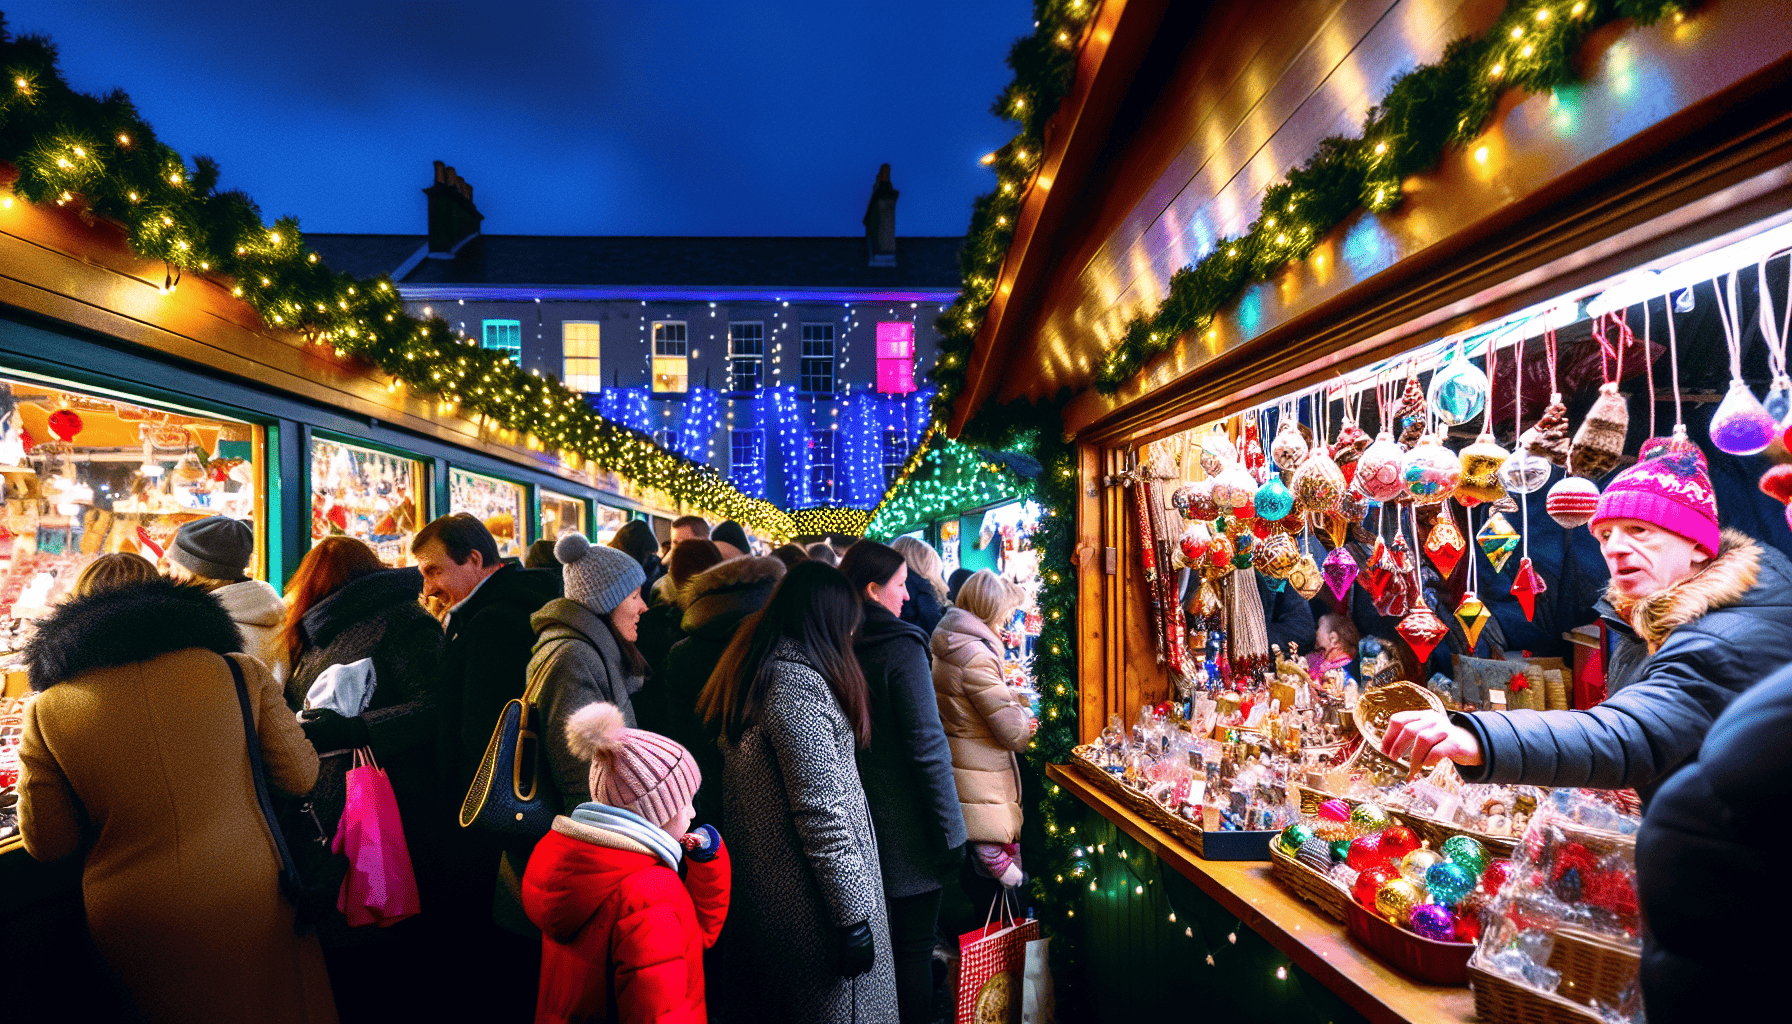 Festive Christmas market in Ireland